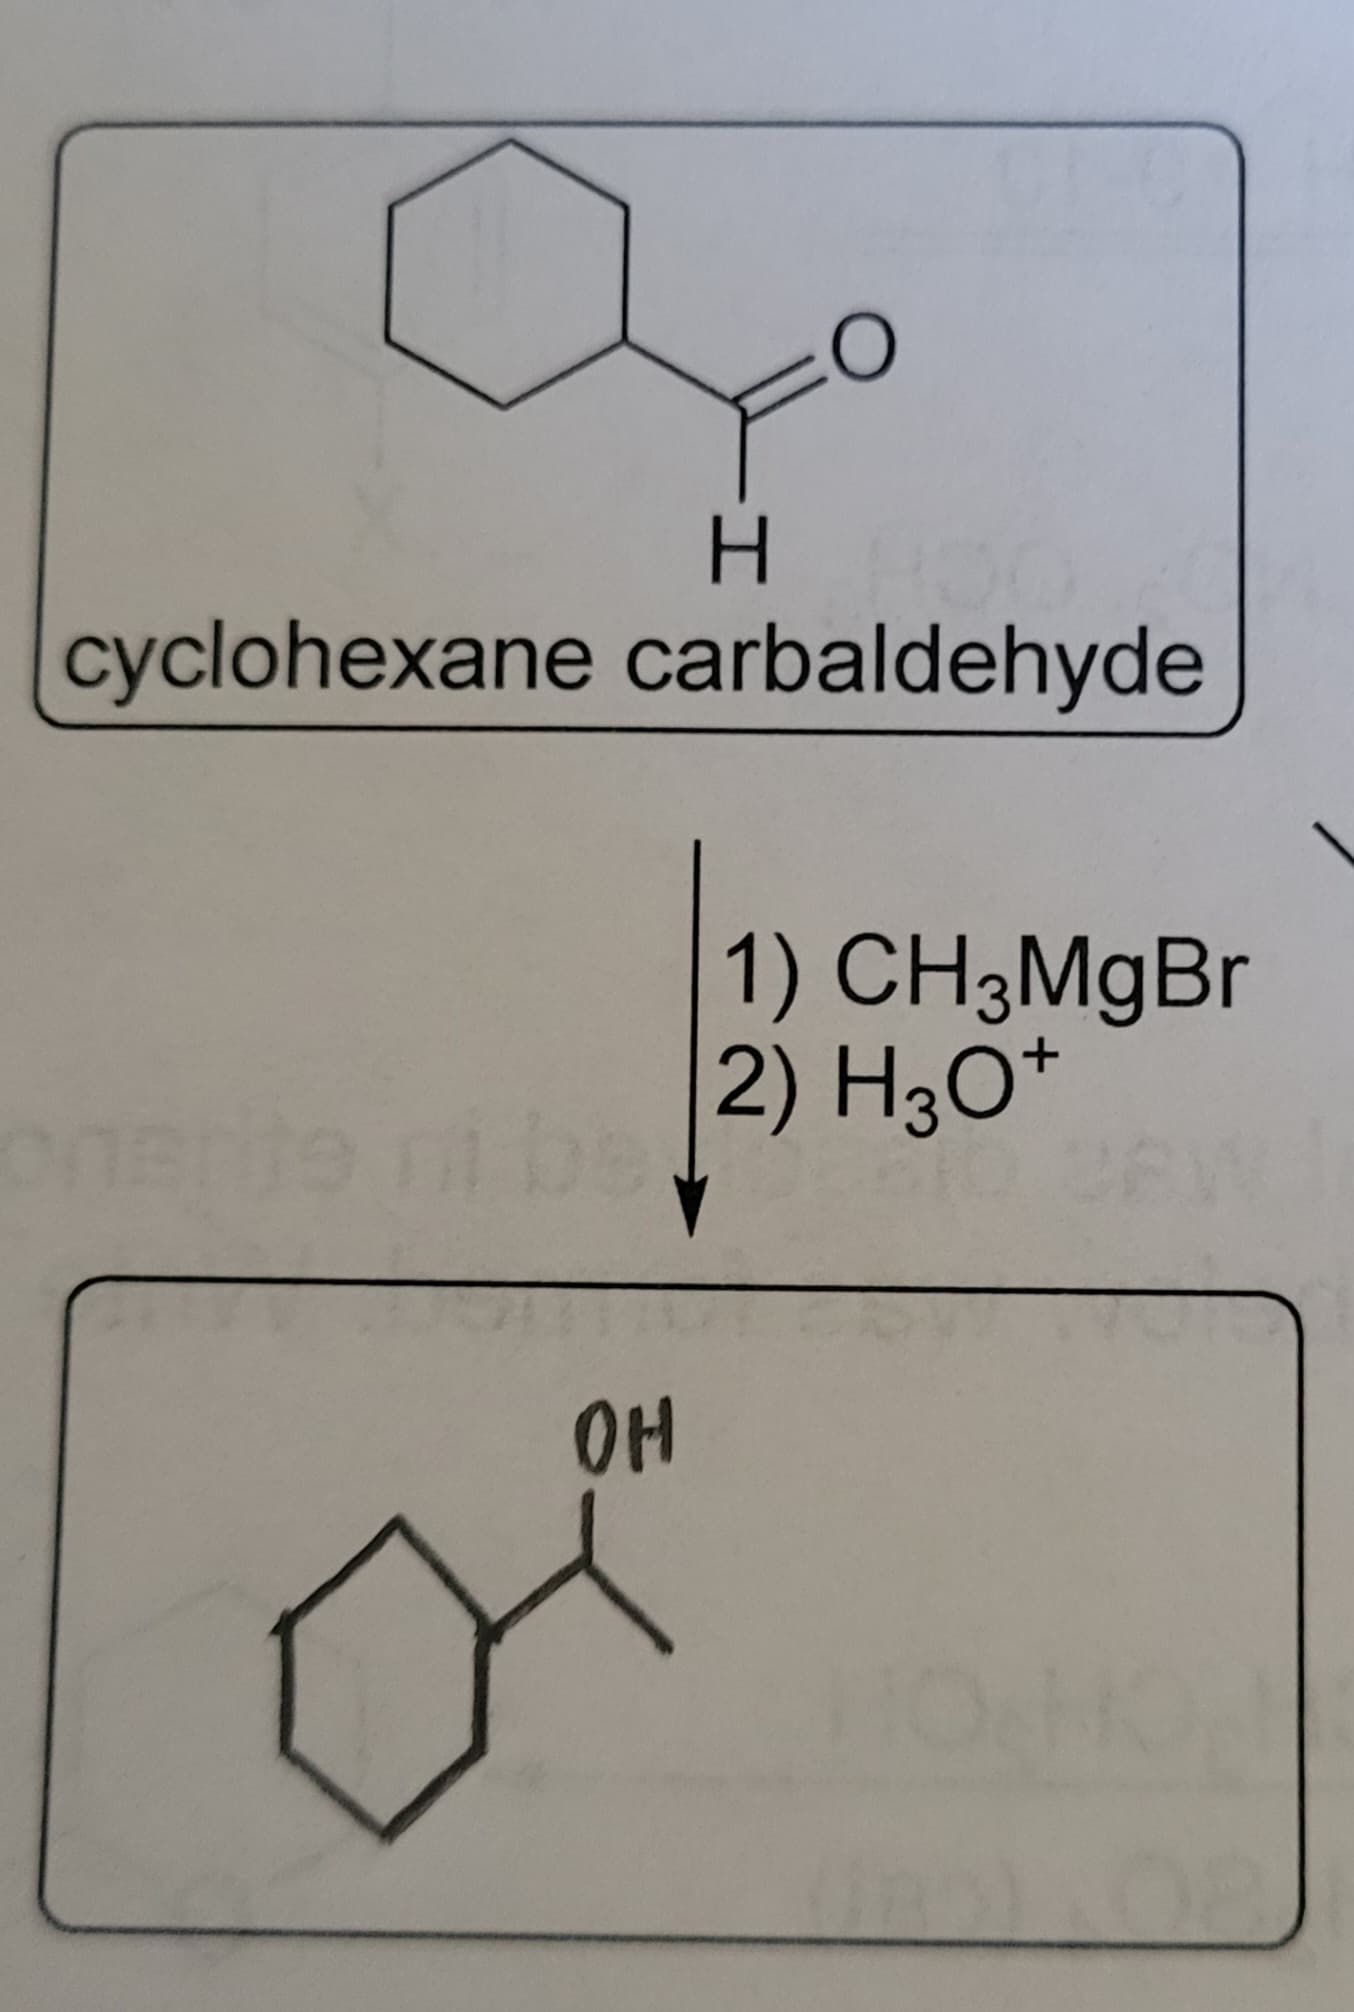 H
cyclohexane carbaldehyde
ons
O
OH
1) CH3MgBr
2) H3O+
HONO